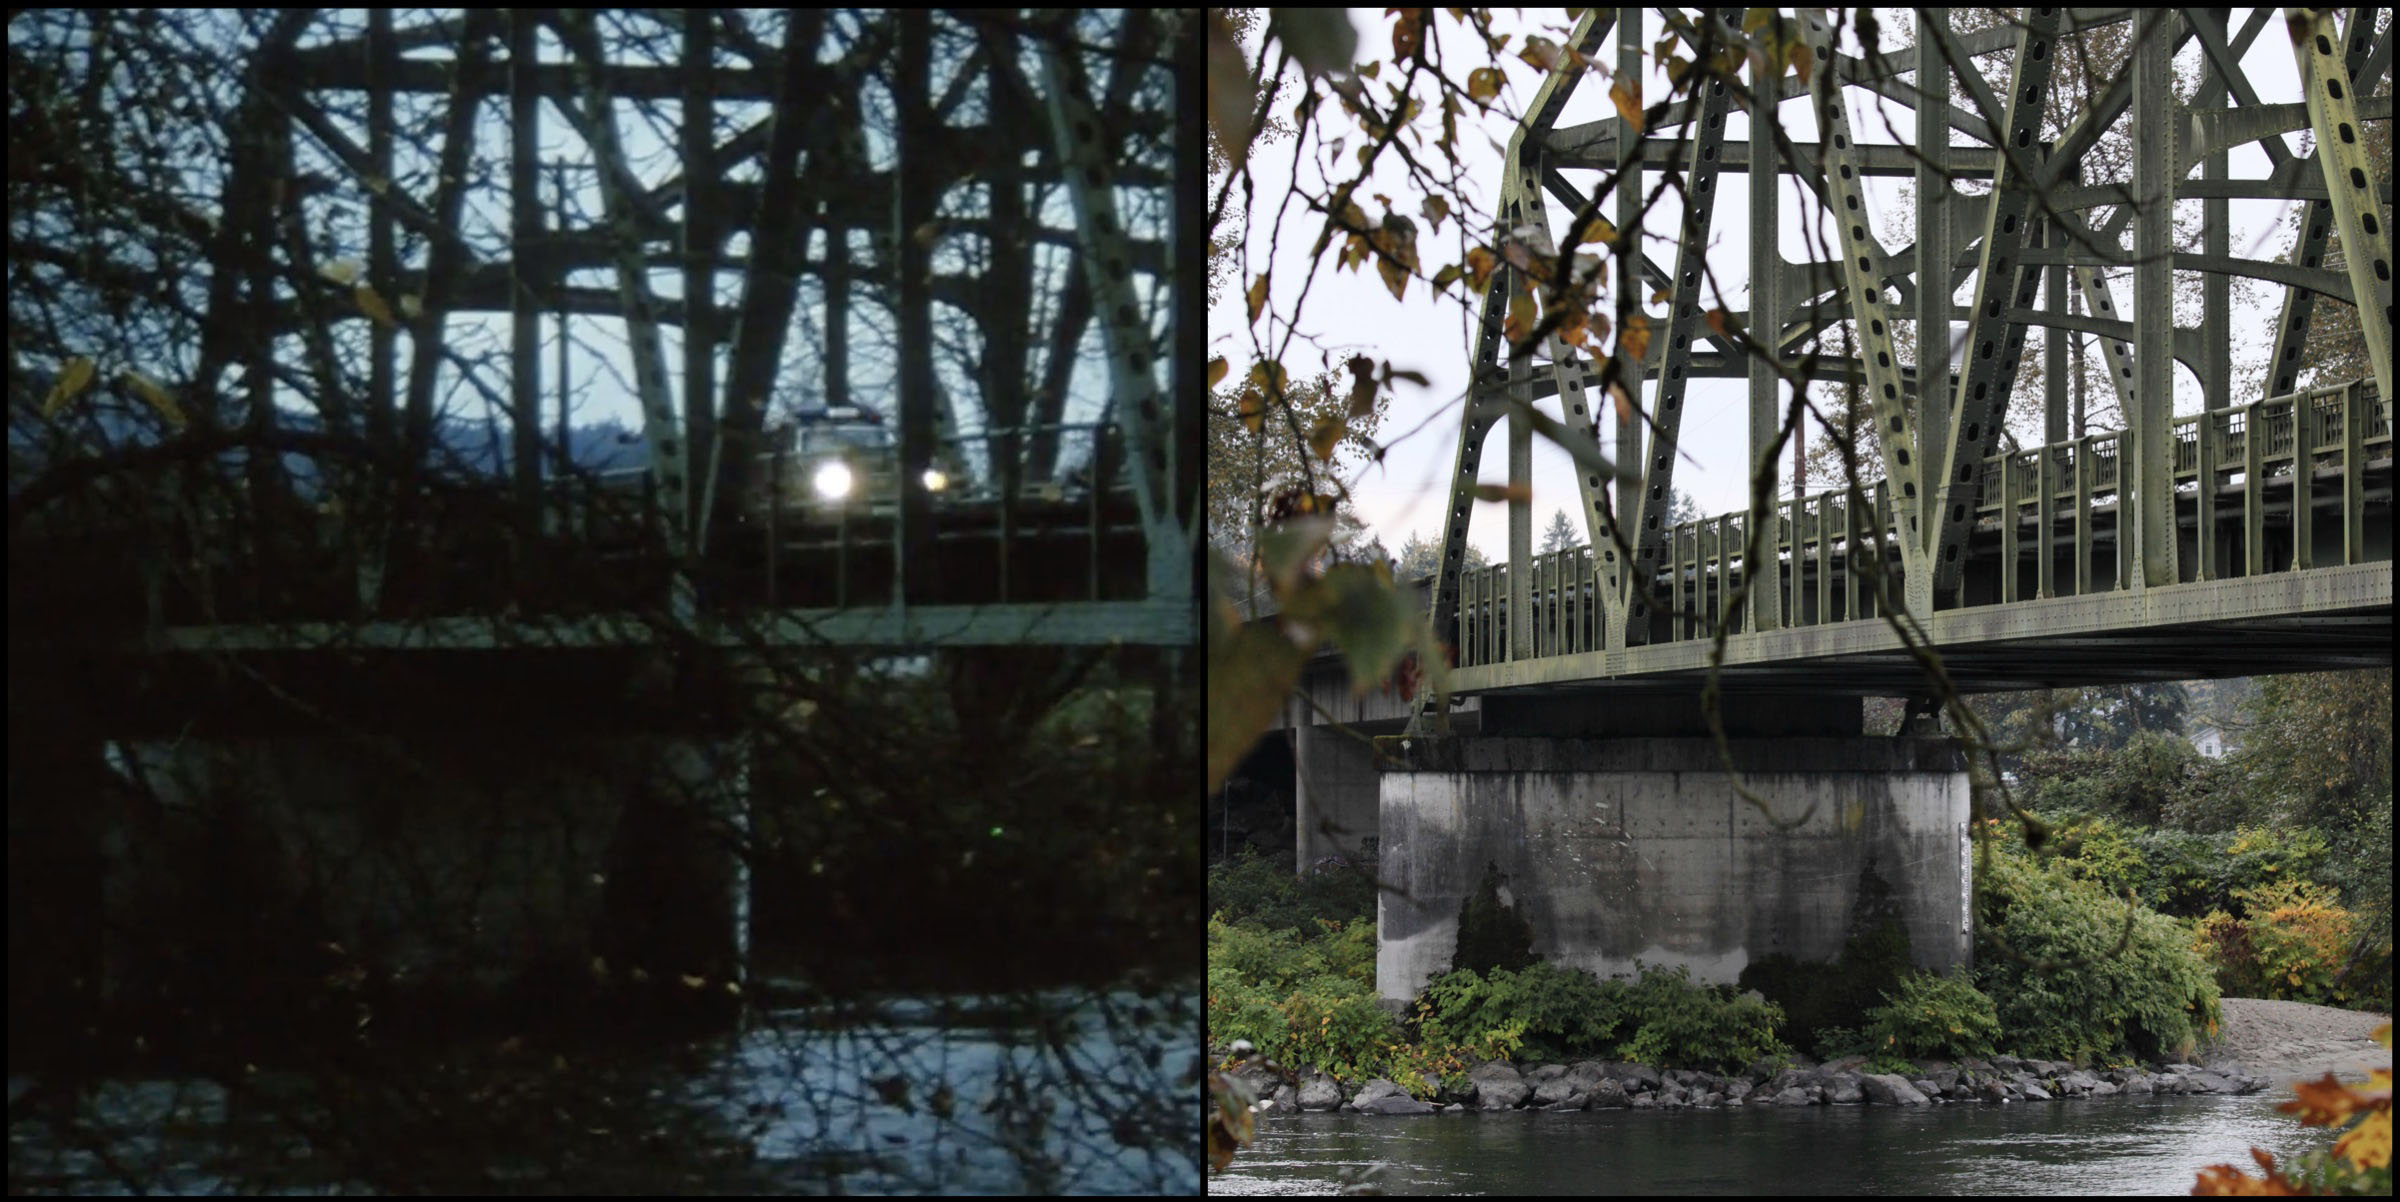 Dual images of bridges